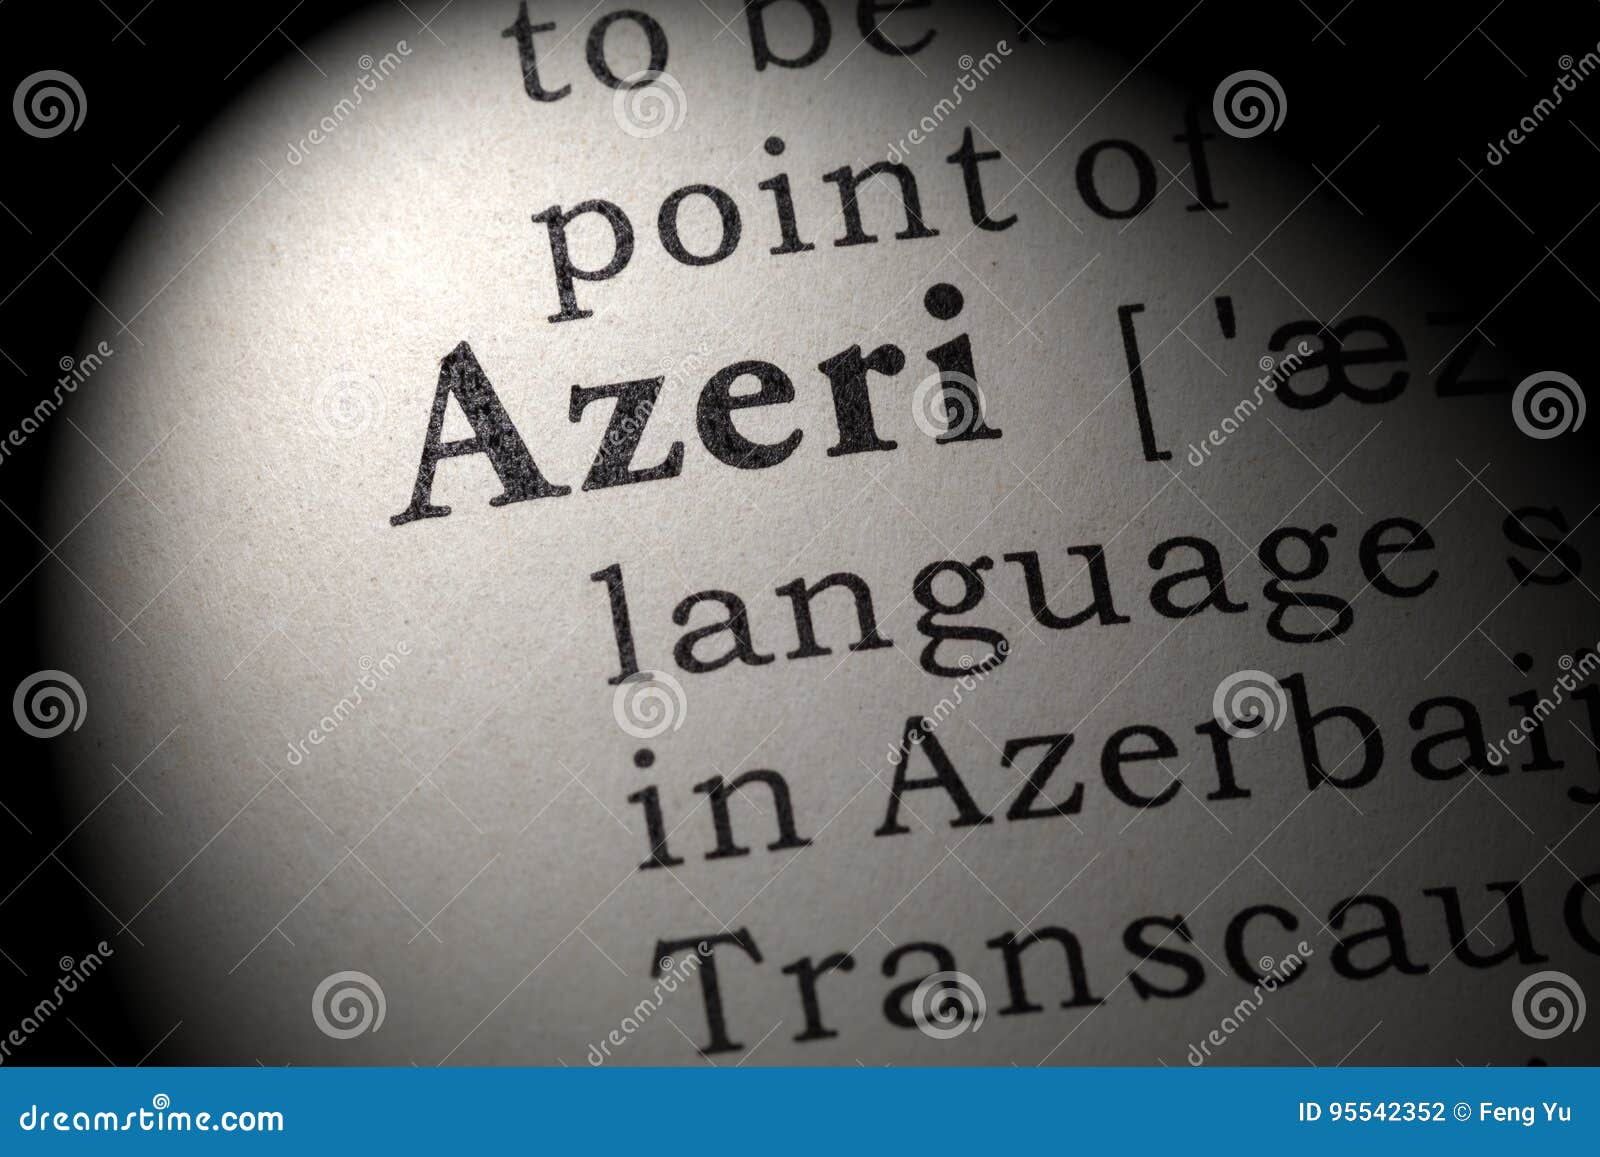 definition of azeri